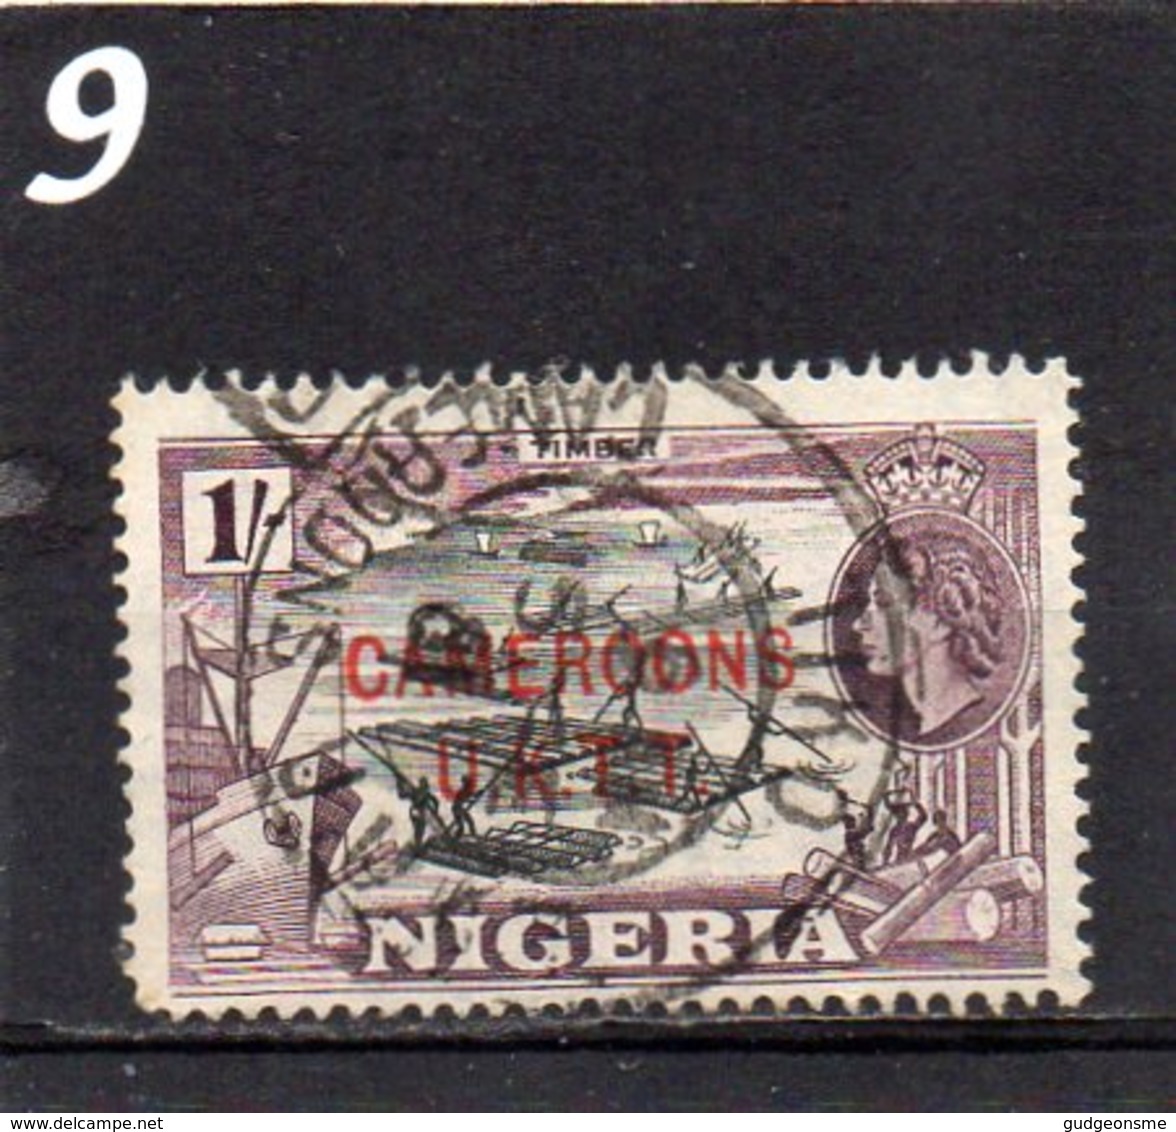 1960 Overprint NIGERIA ISSUES 1/- Used - Cameroun